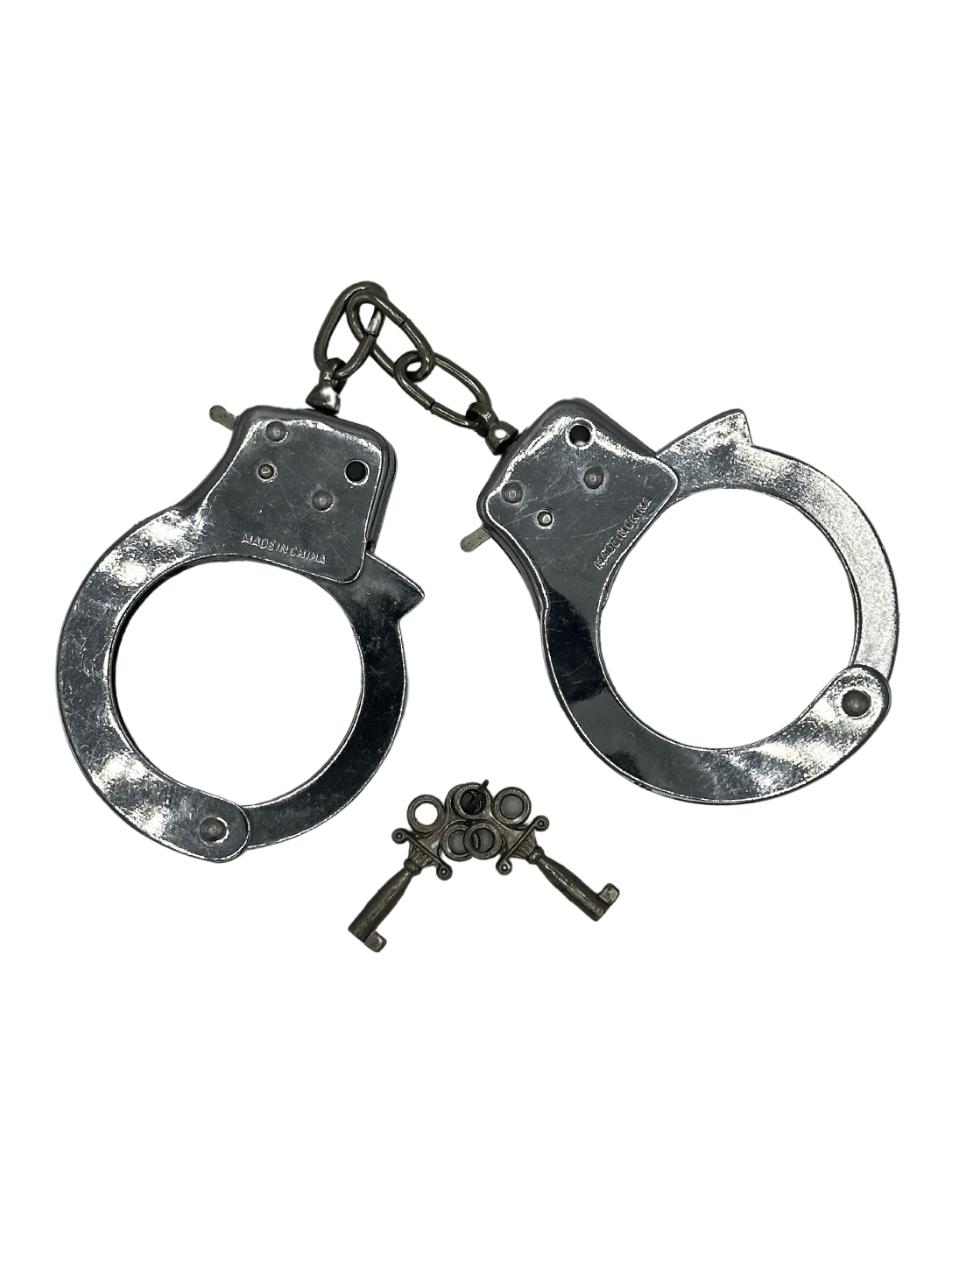 Stainless Steel Handcuffs